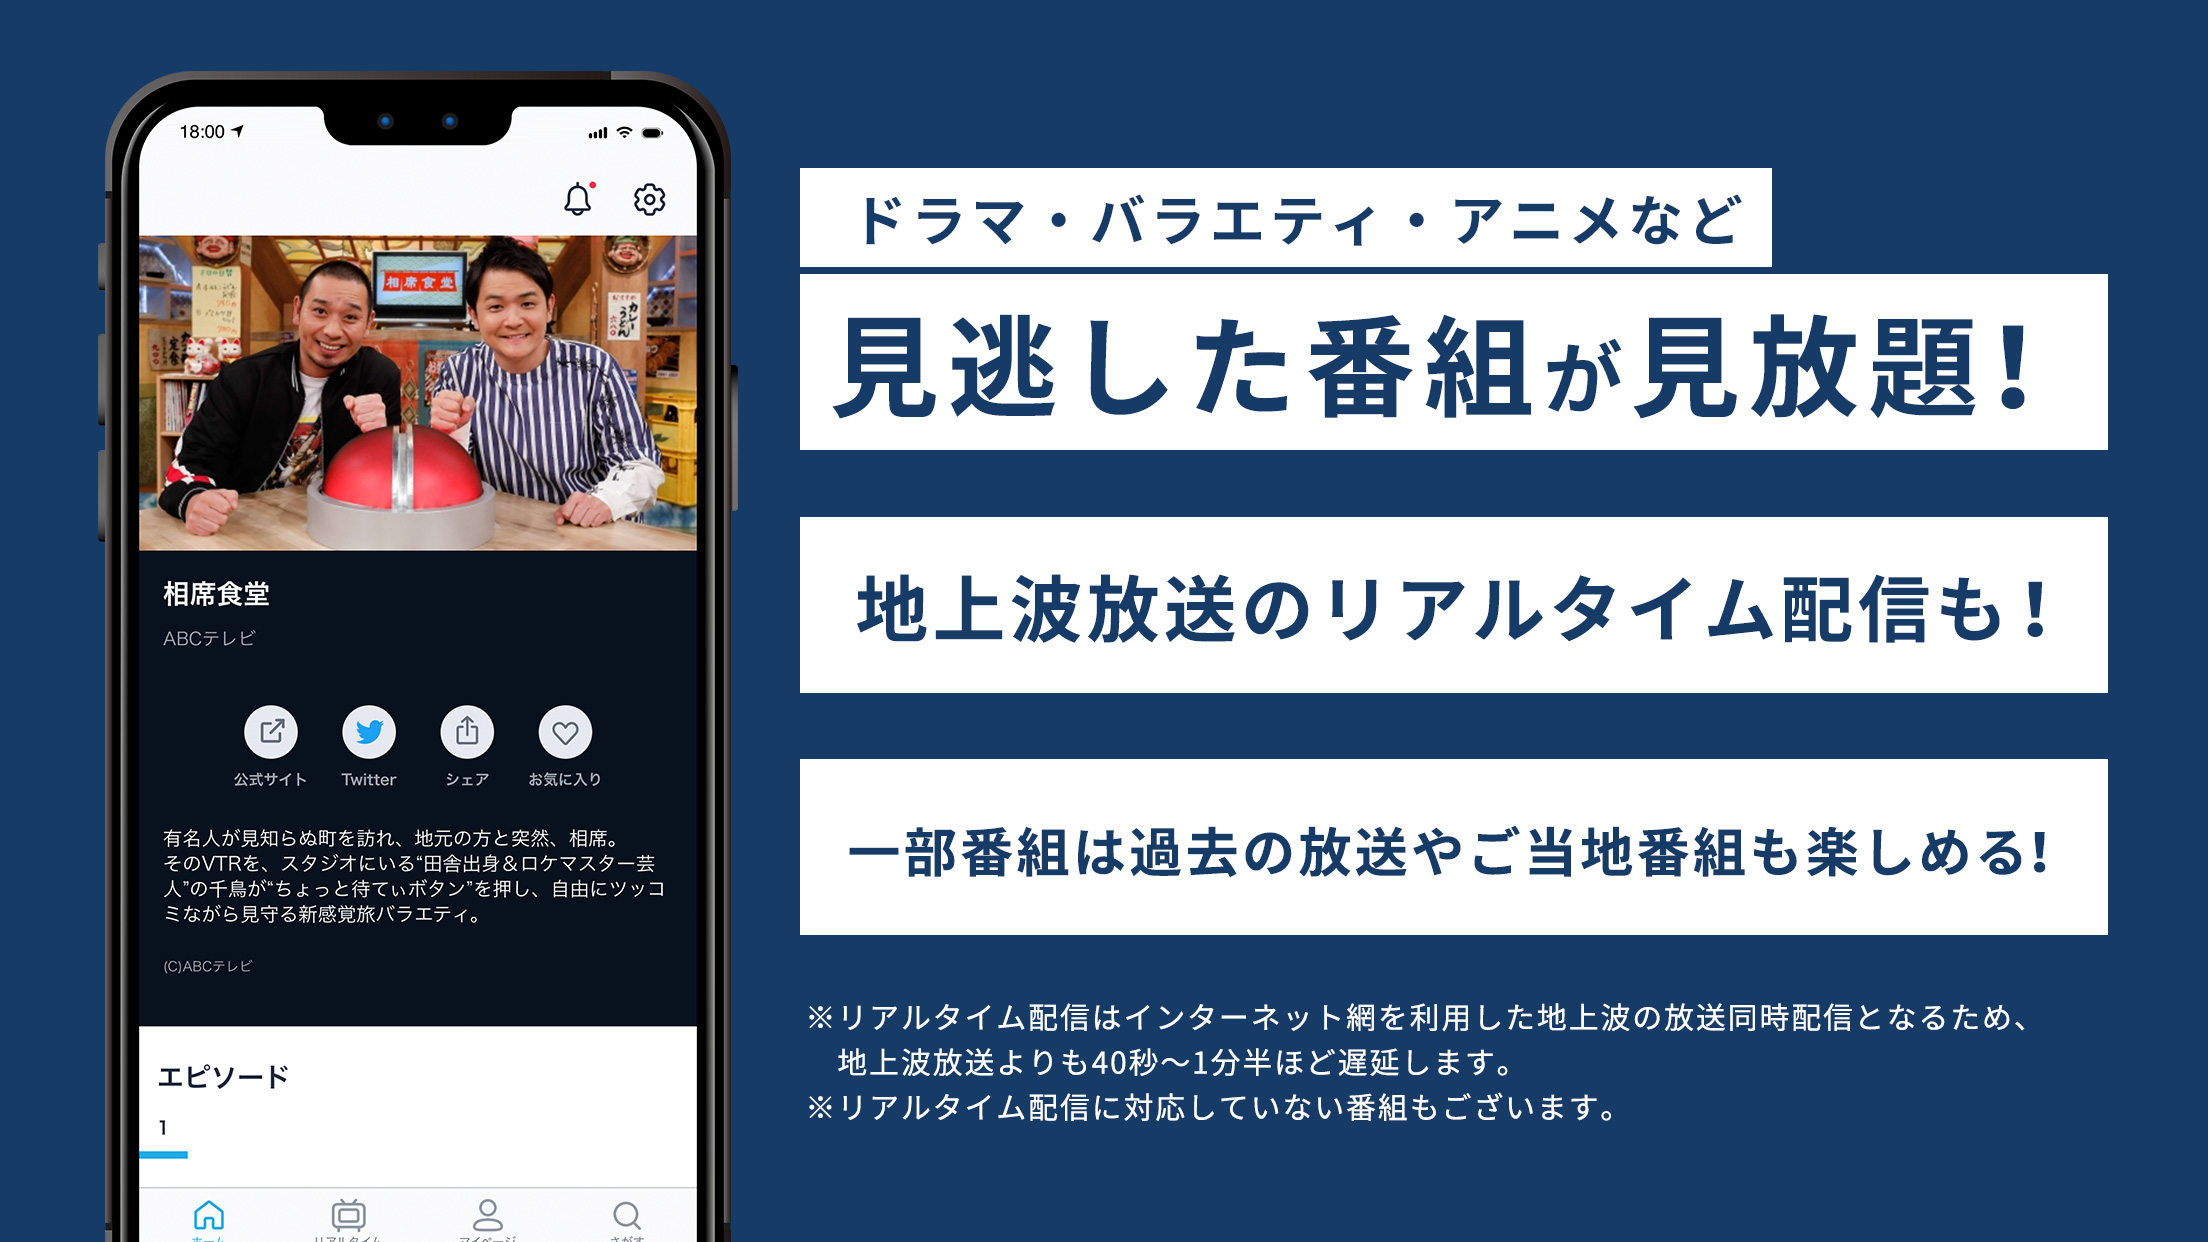 Android application TVer(ティーバー) 民放公式テレビ配信サービス screenshort